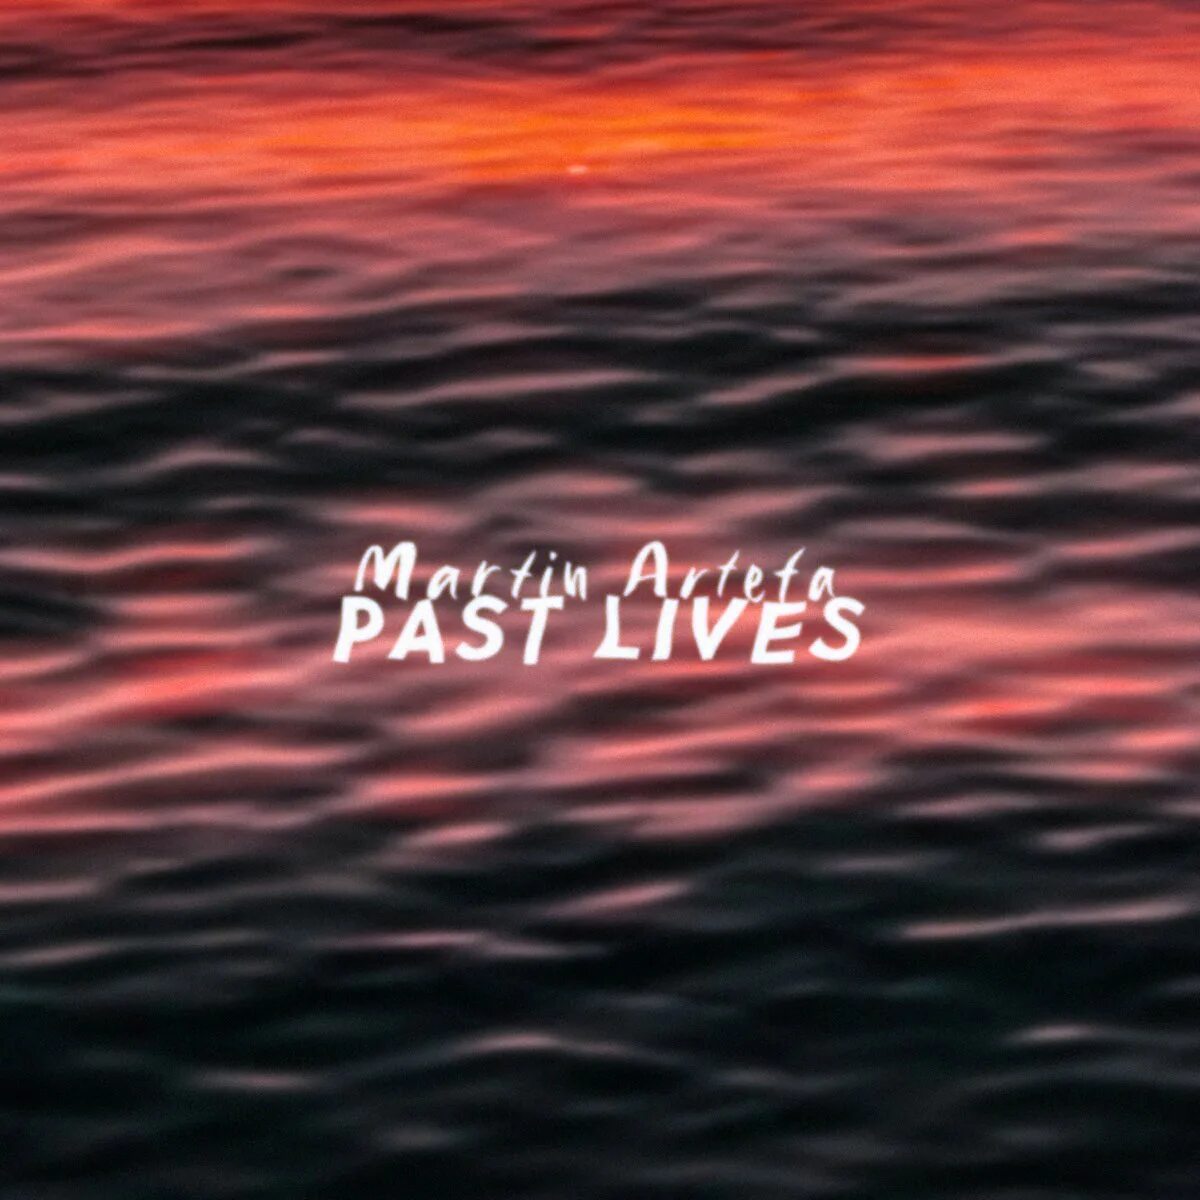 Музыка past live. Past Lives(feat. Martin Arteta. Past Lives обложка. Песня past Lives. Слушать музыку past Lives.